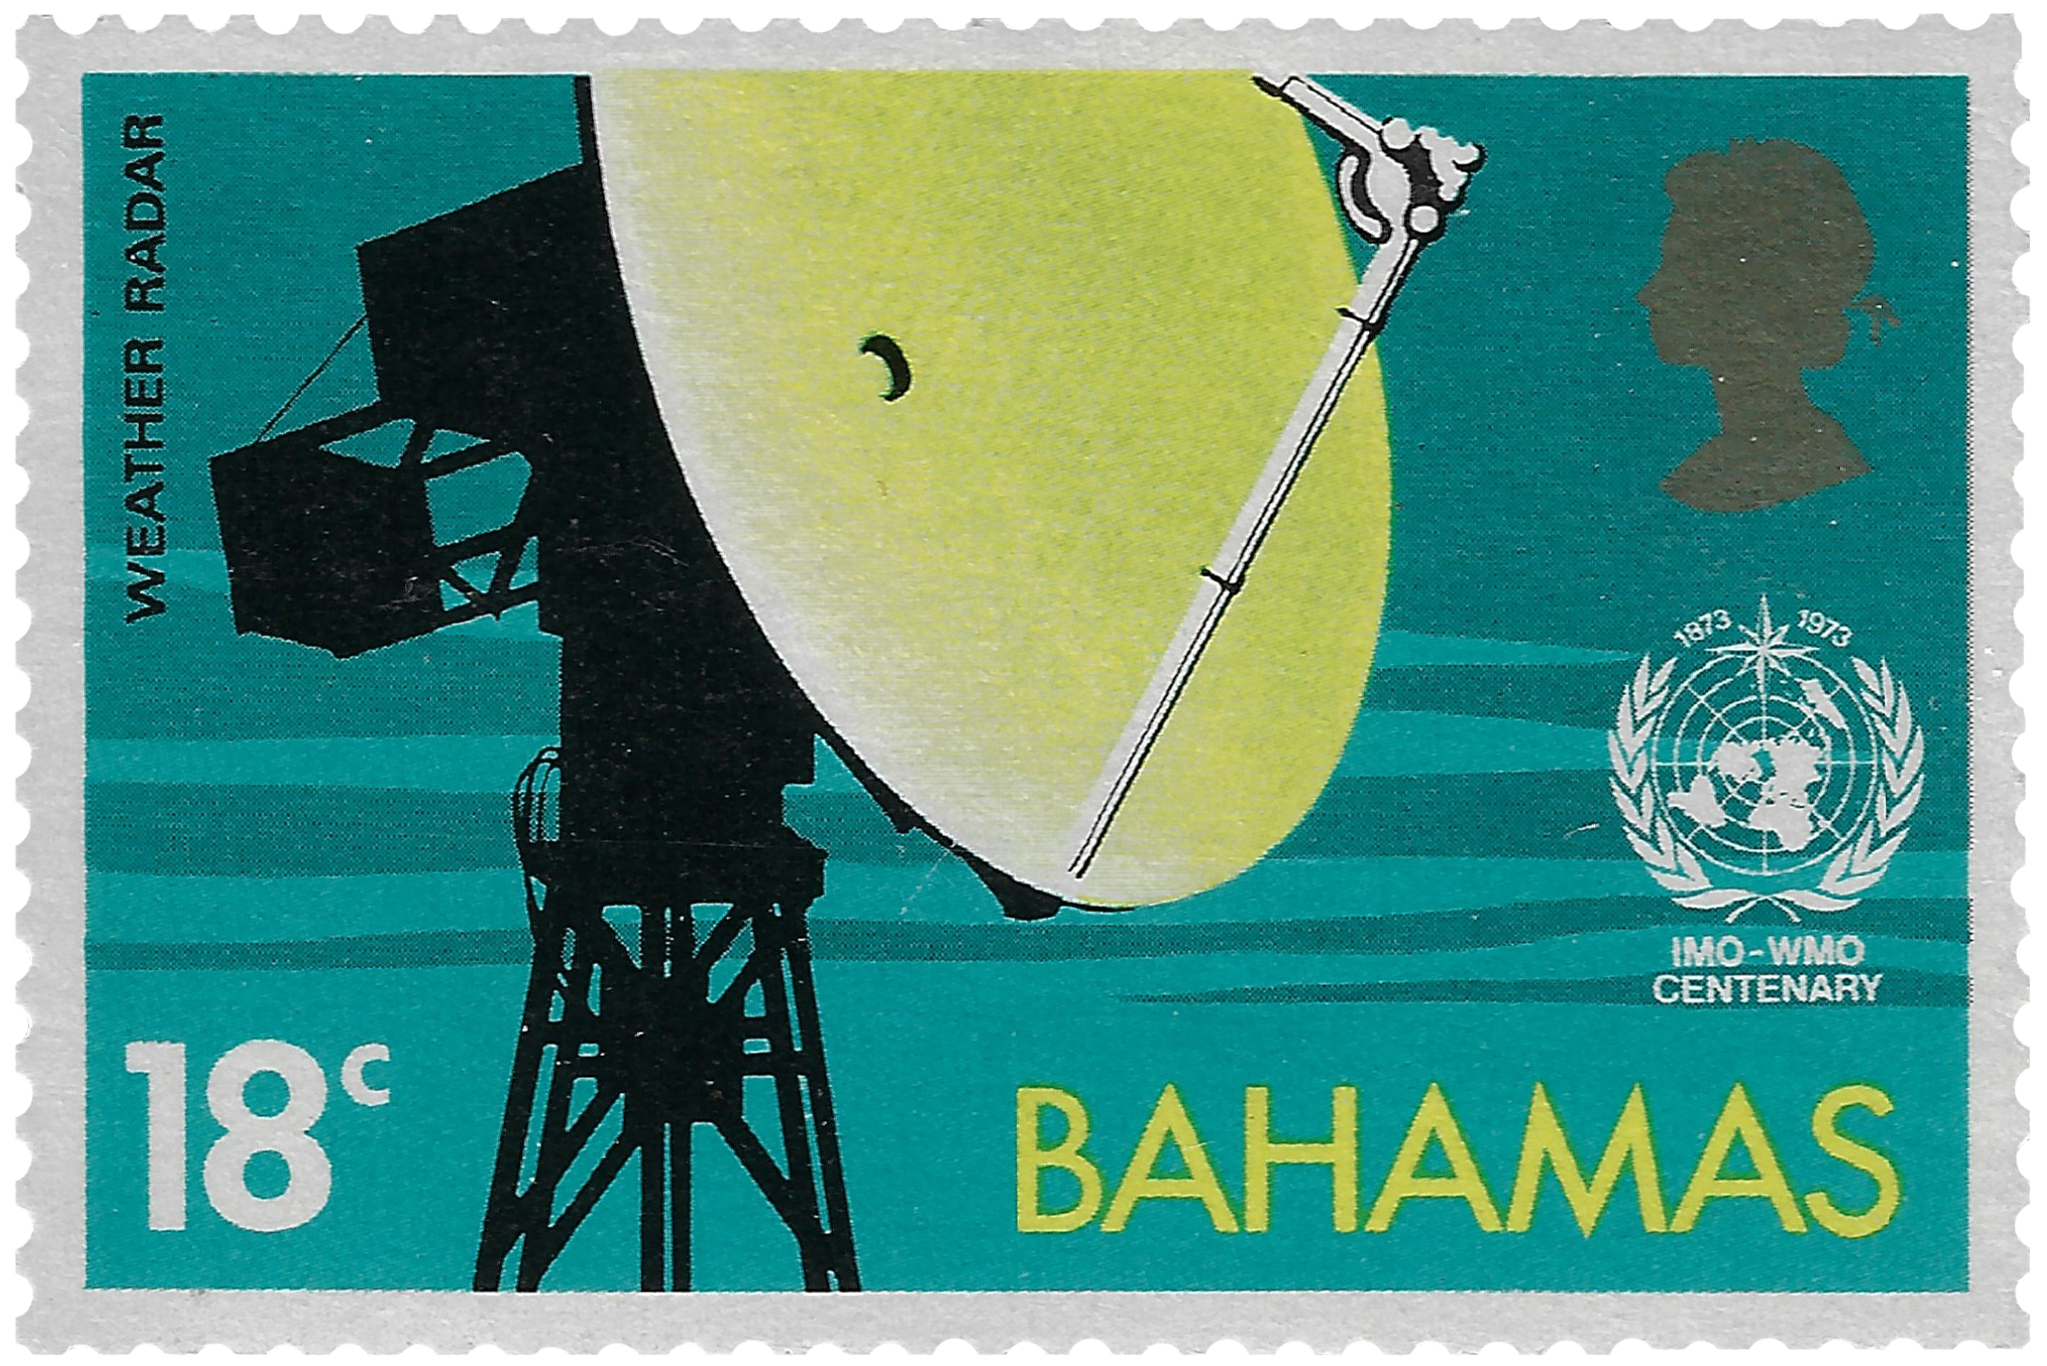 18c 1973, Weather Radar, IMO-WMO Centenary